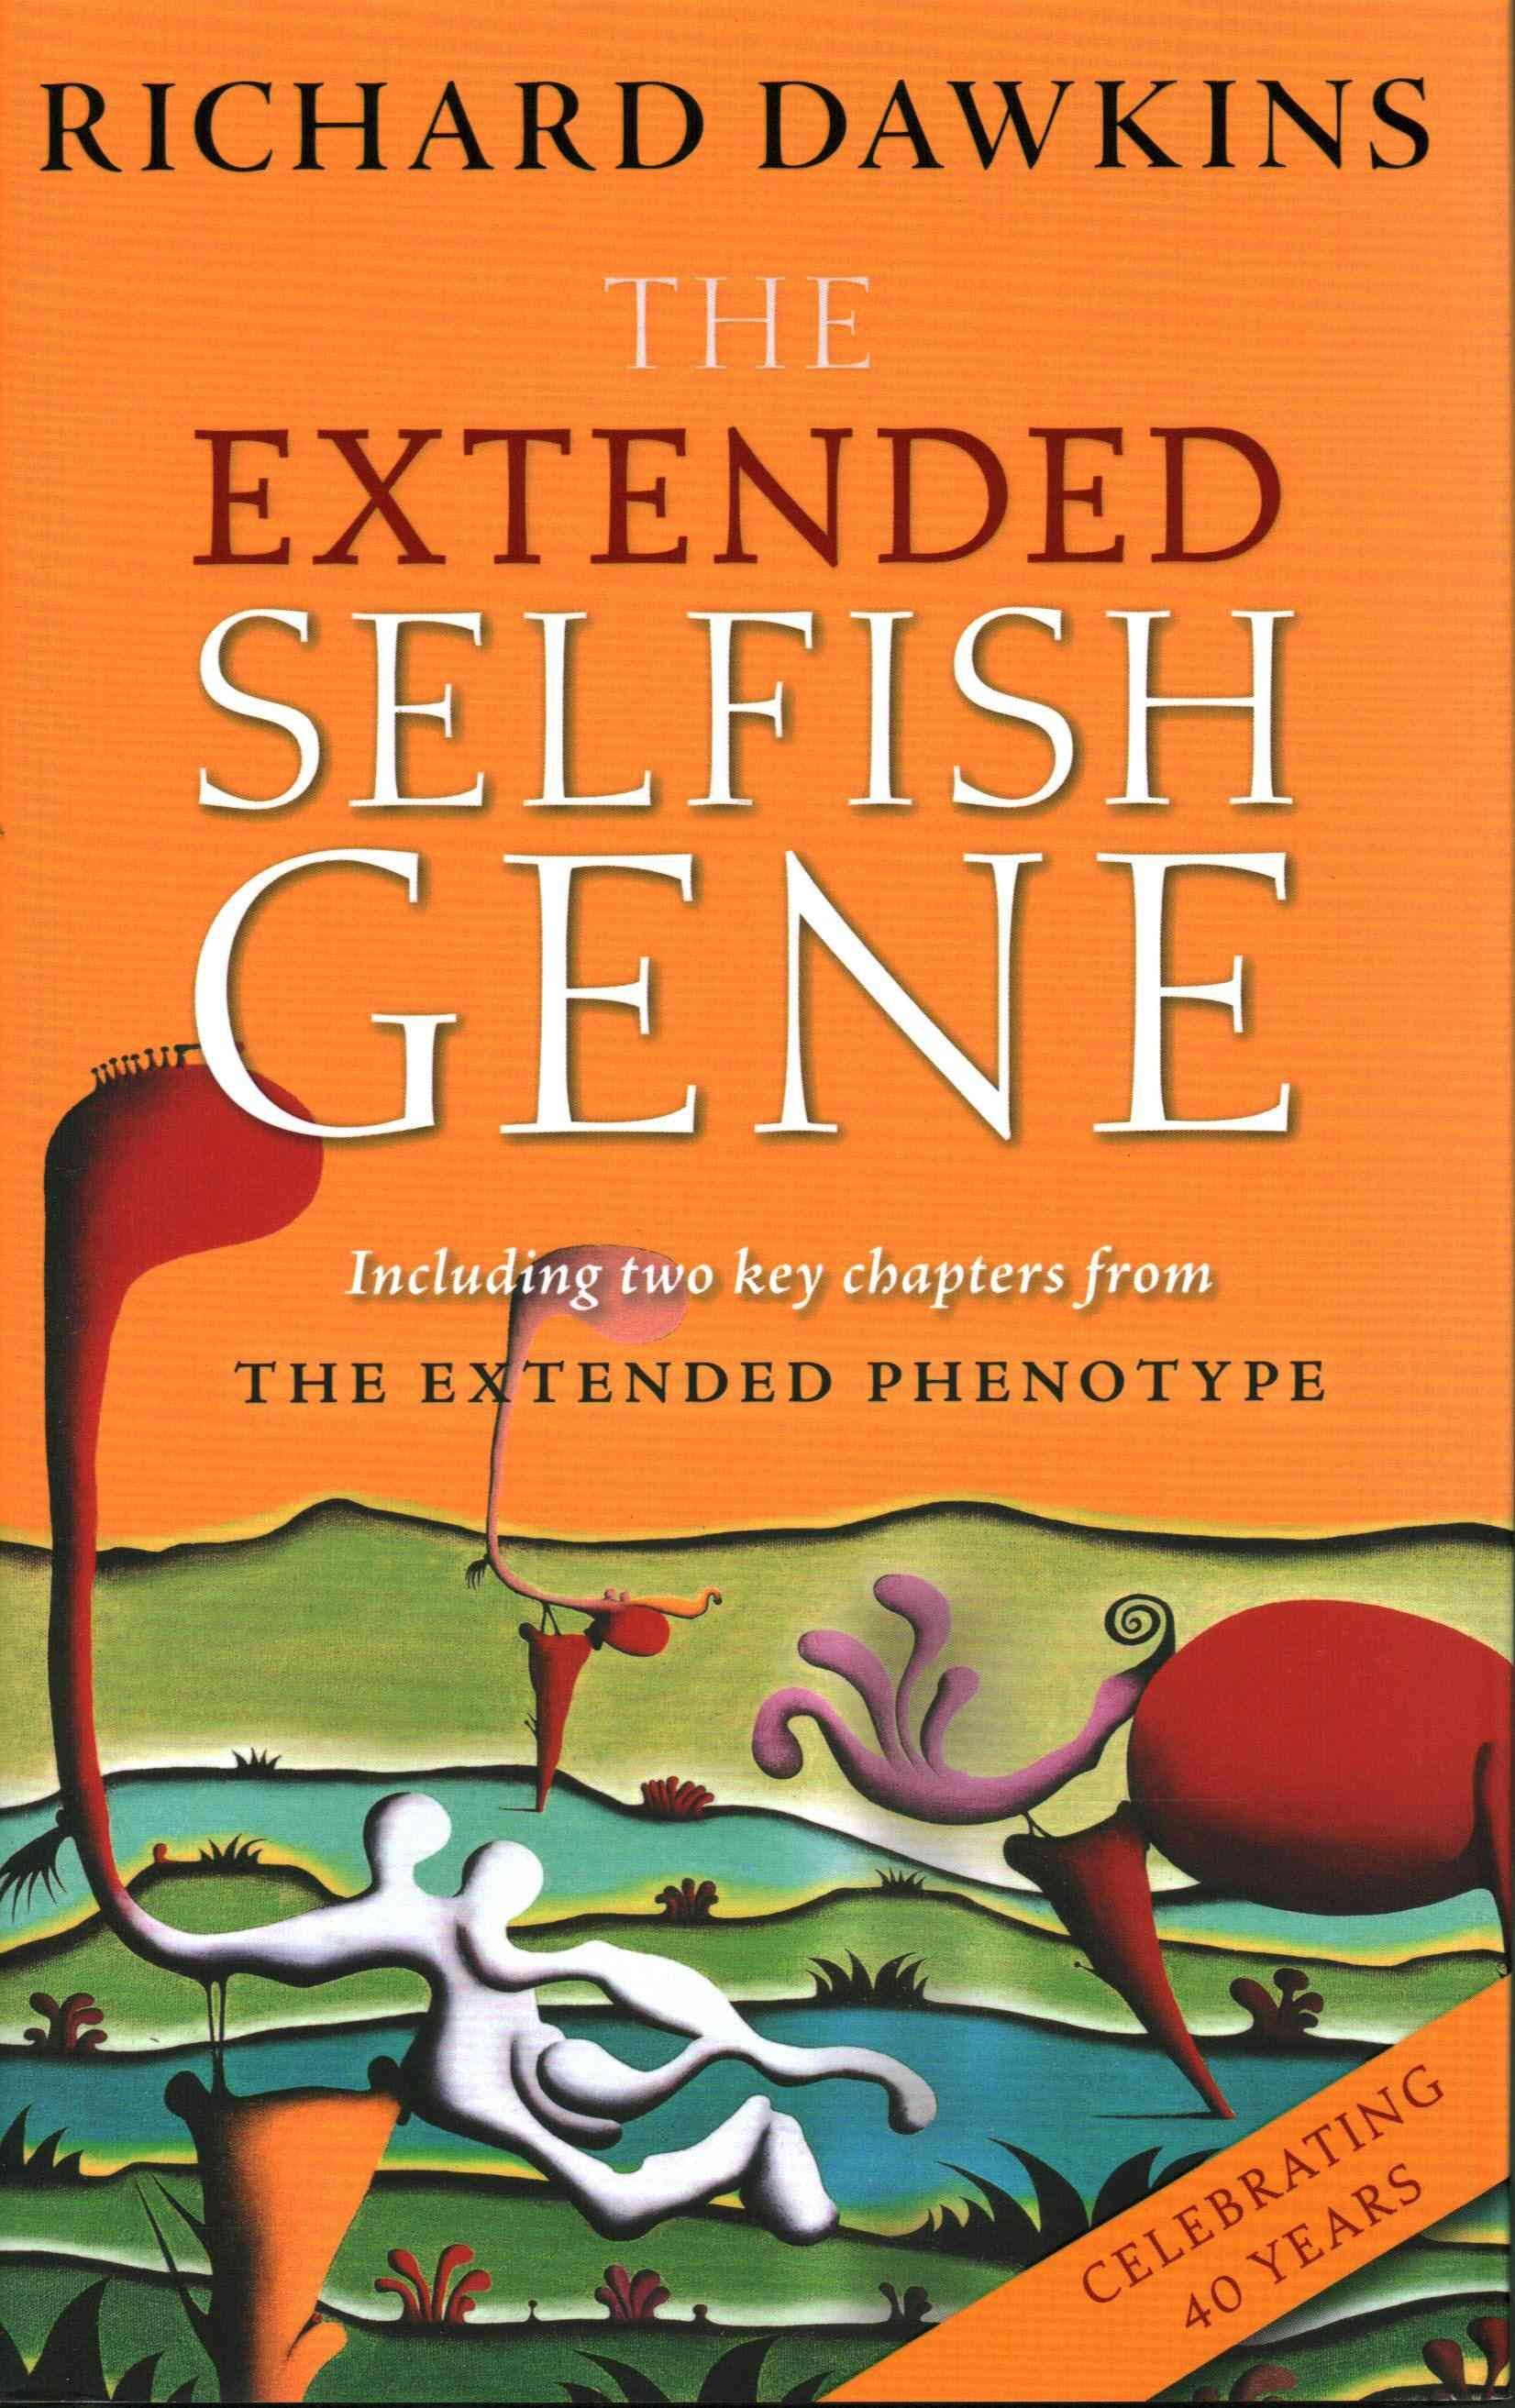 the selfish gene latest edition